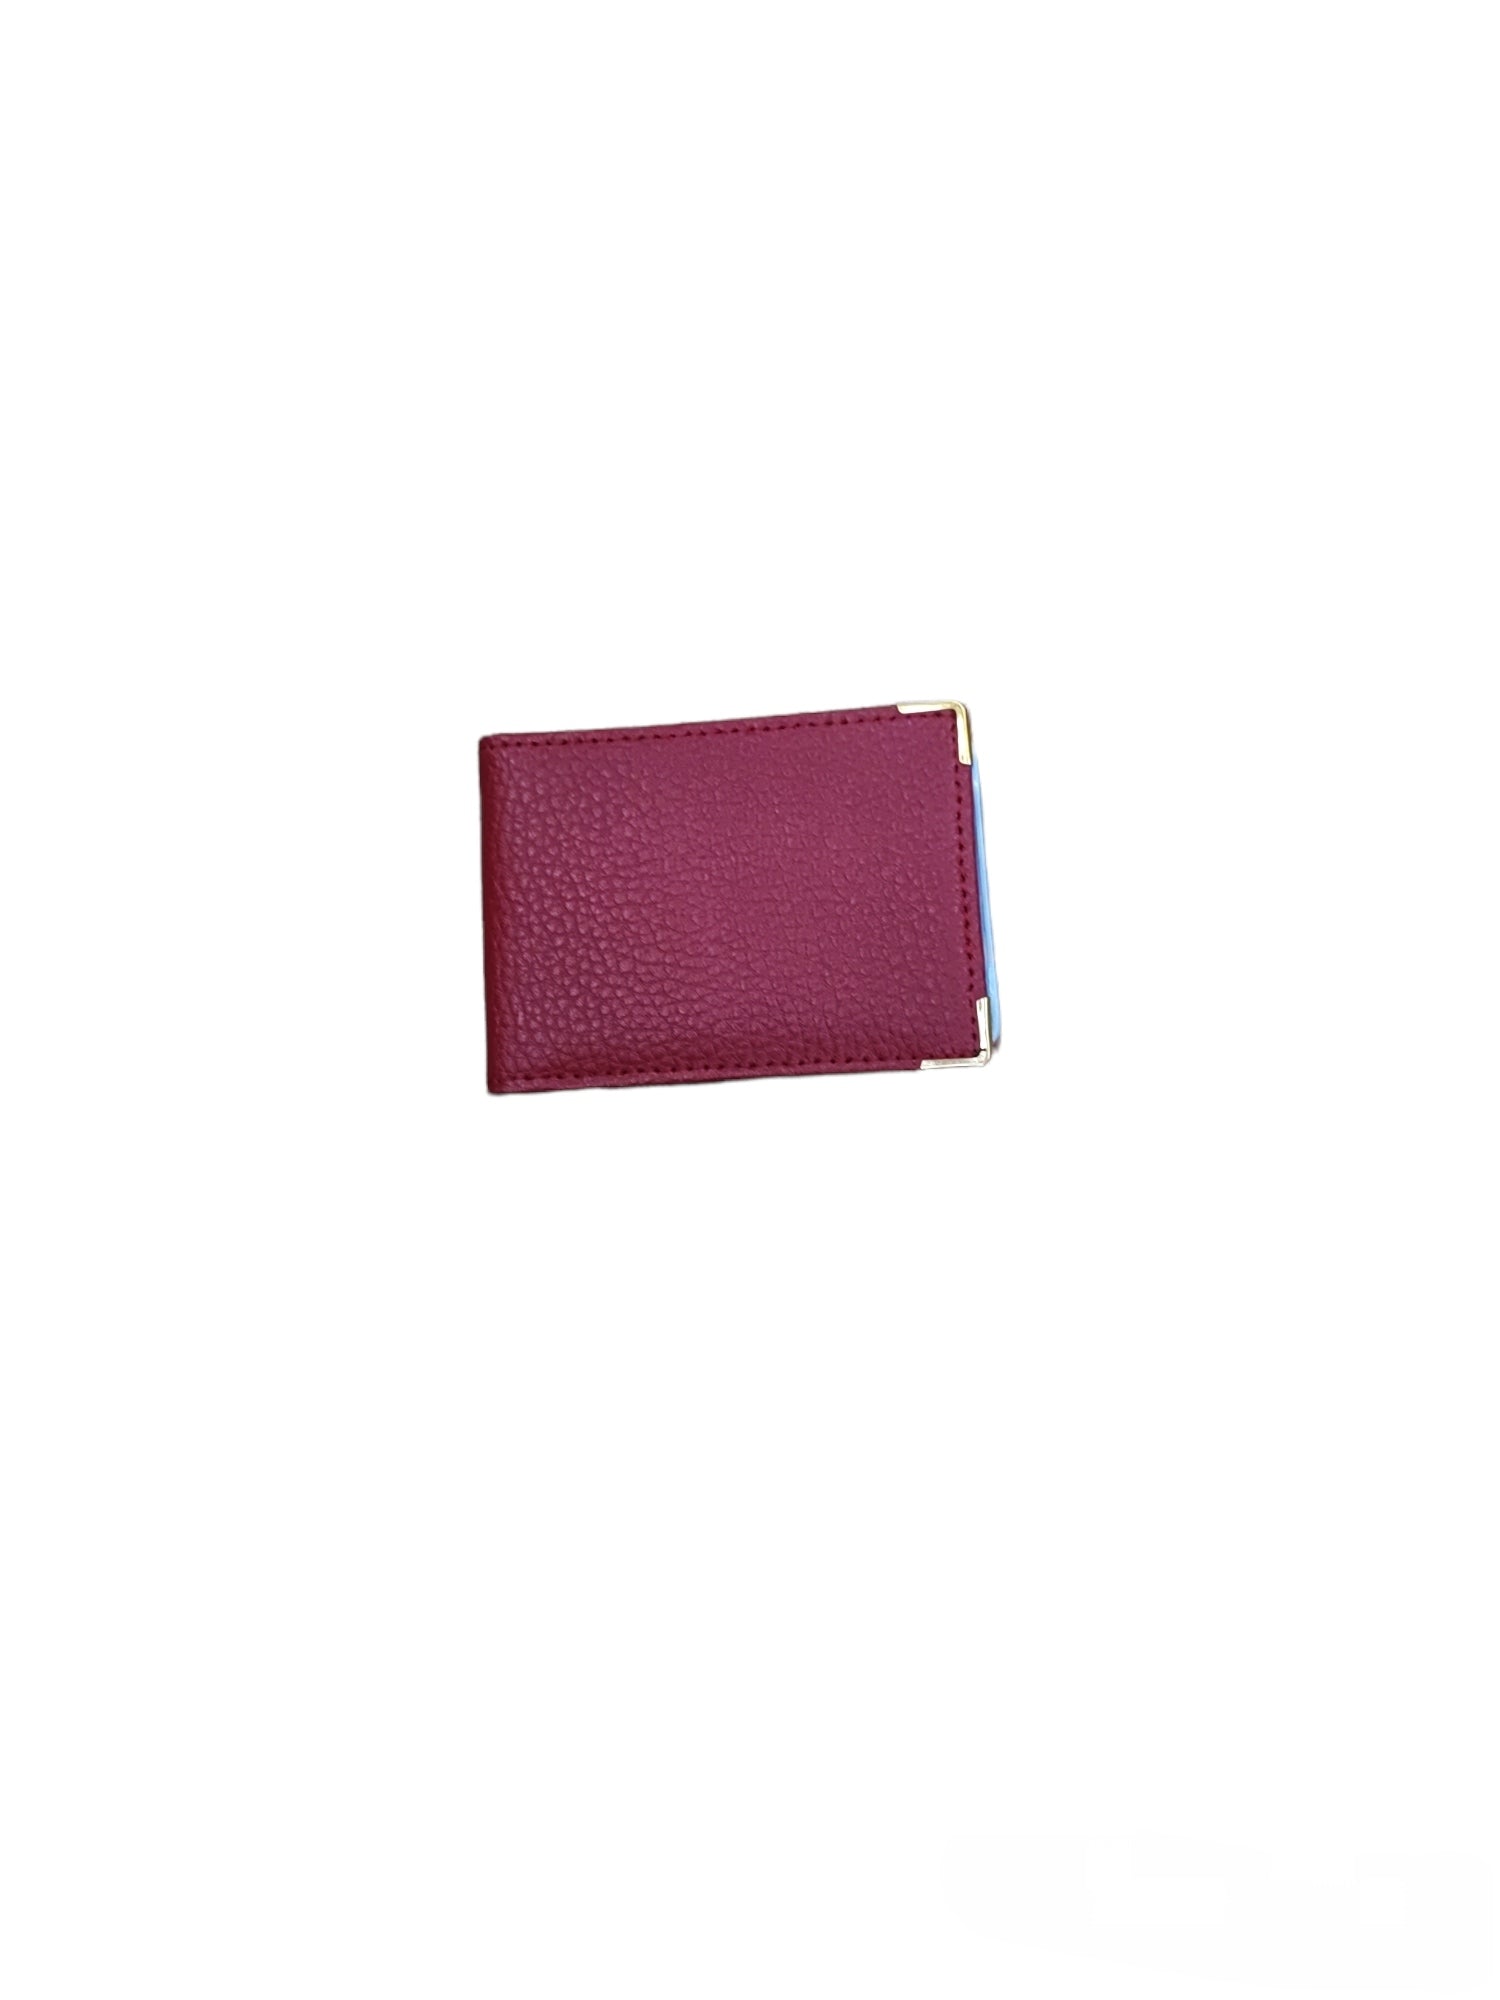 Card holder Split cowhide leather #N-015 (x12)